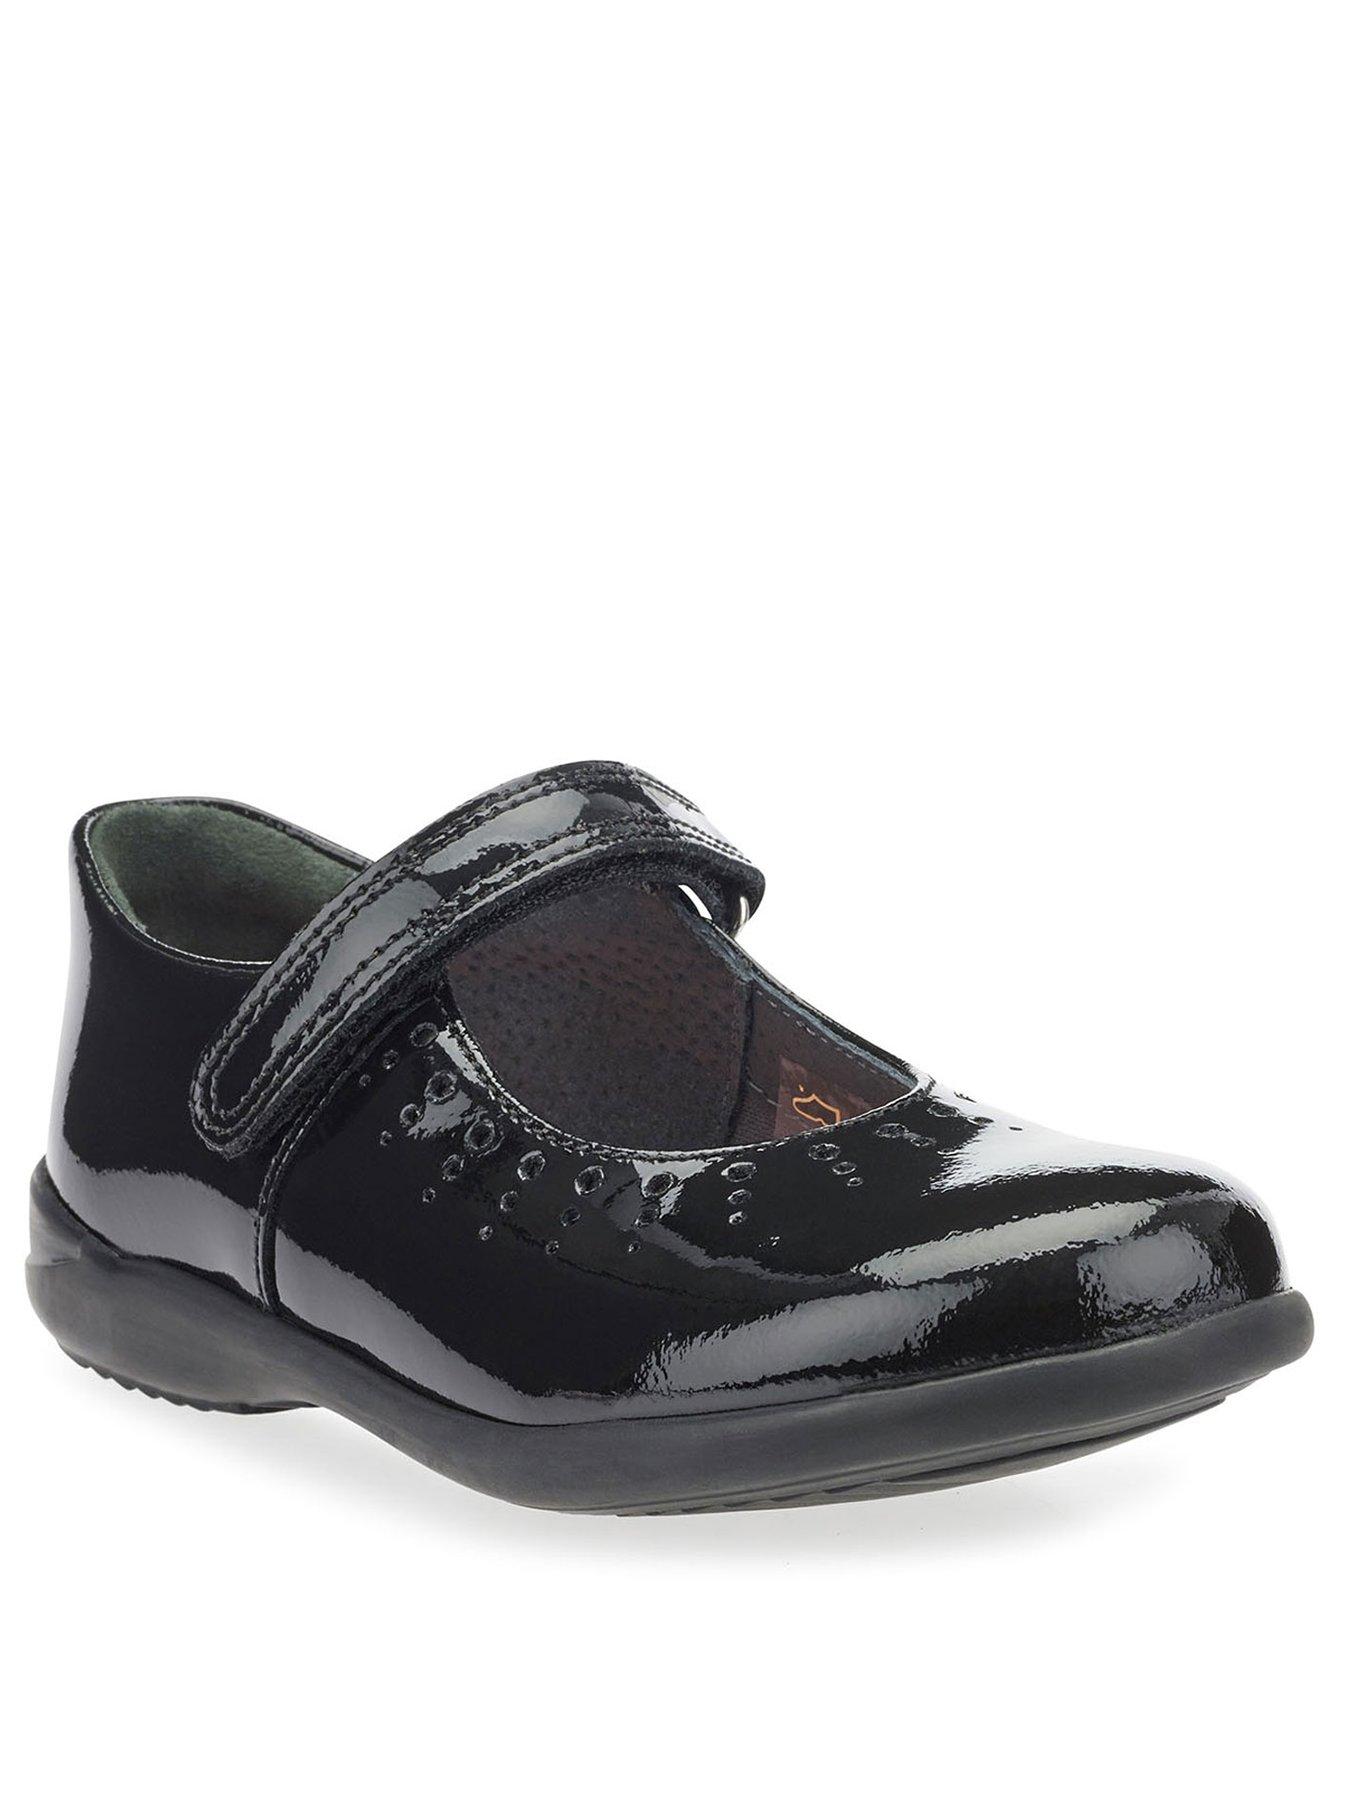 School & uniform Girls Mary Jane School Shoes - Black Patent